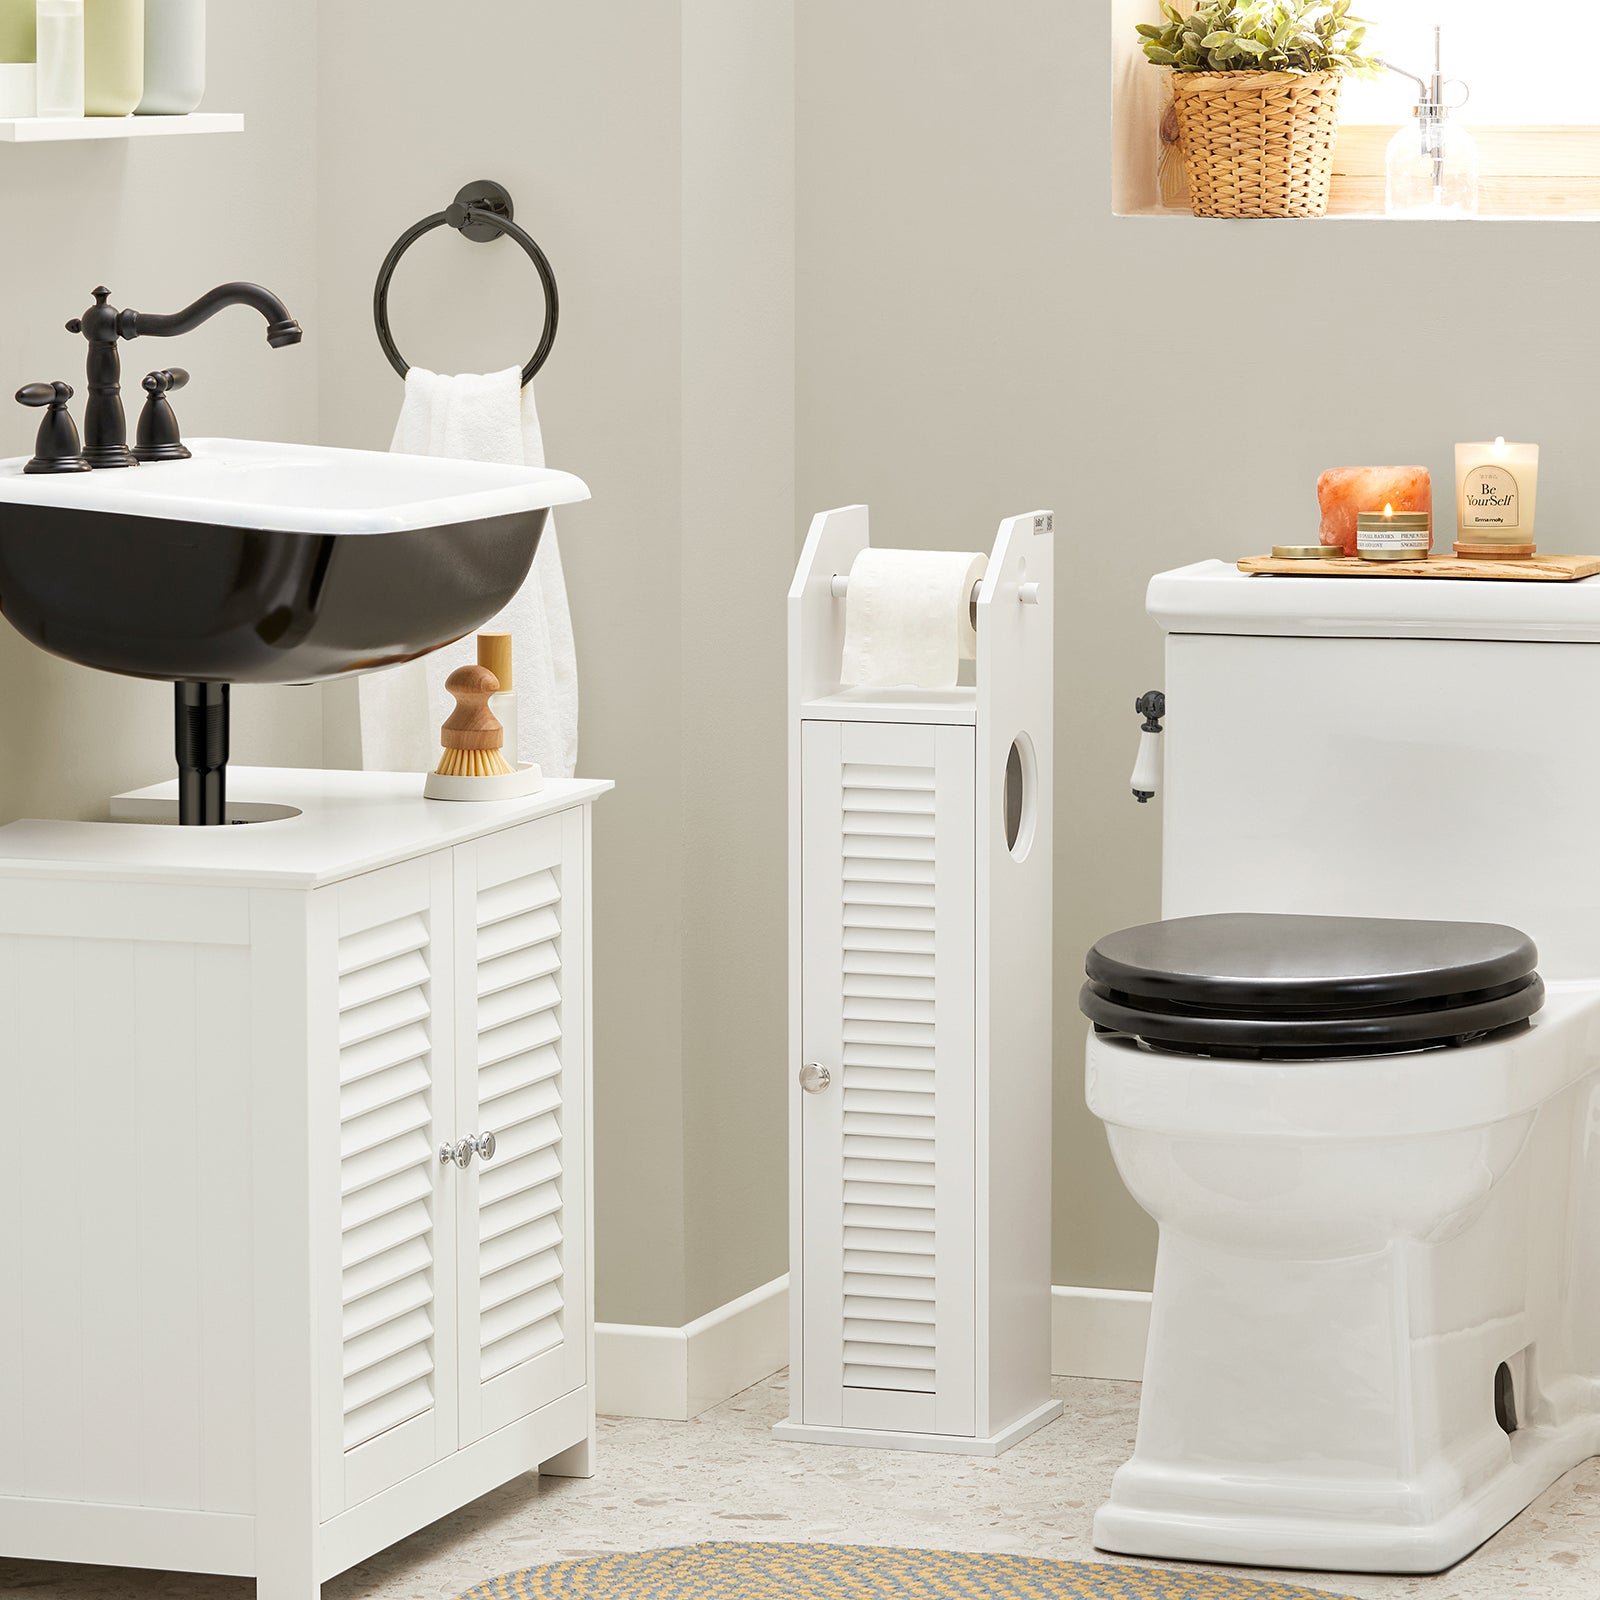 SoBuy White Free Standing Wooden Bathroom Storage Cabinet,Toilet Brush Holder,BZR49-W